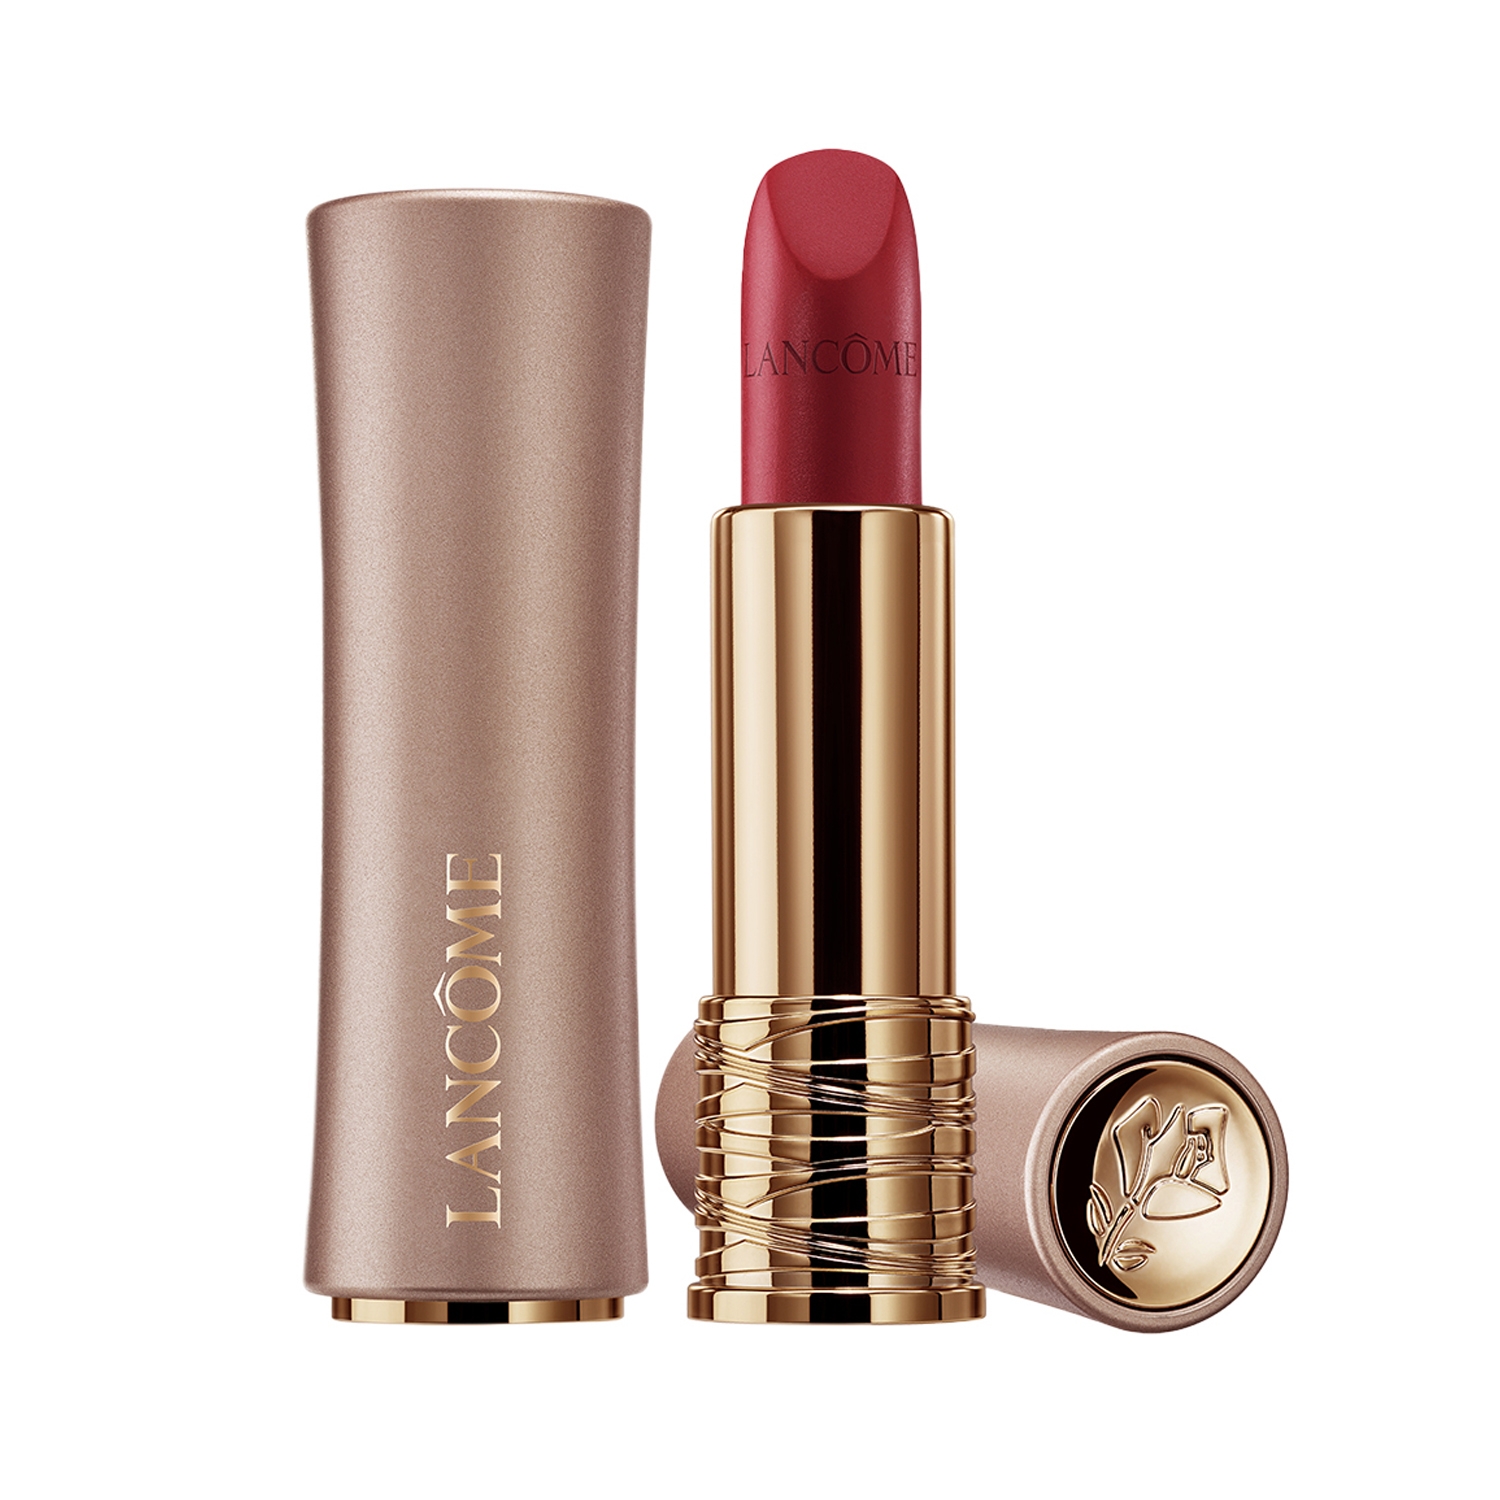 Lancome | Lancome L' Absolu Rouge Intimatte Lipstick - 505 Attrape Coeur (3.4g)